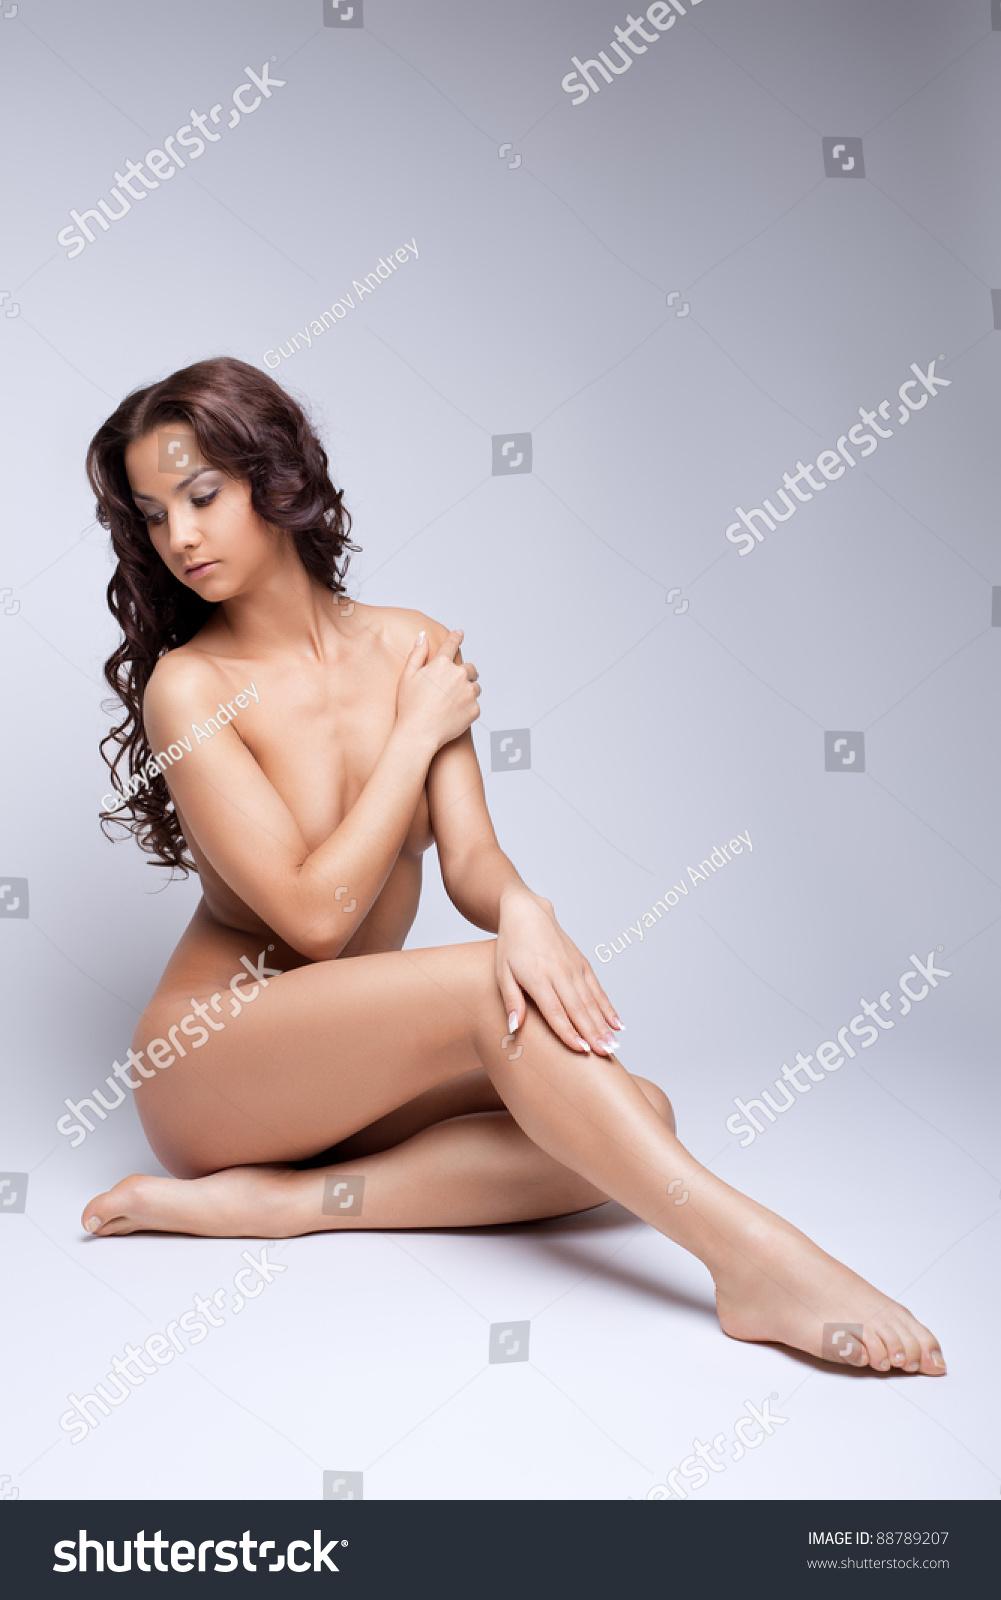 Nude Female Photo Art 113